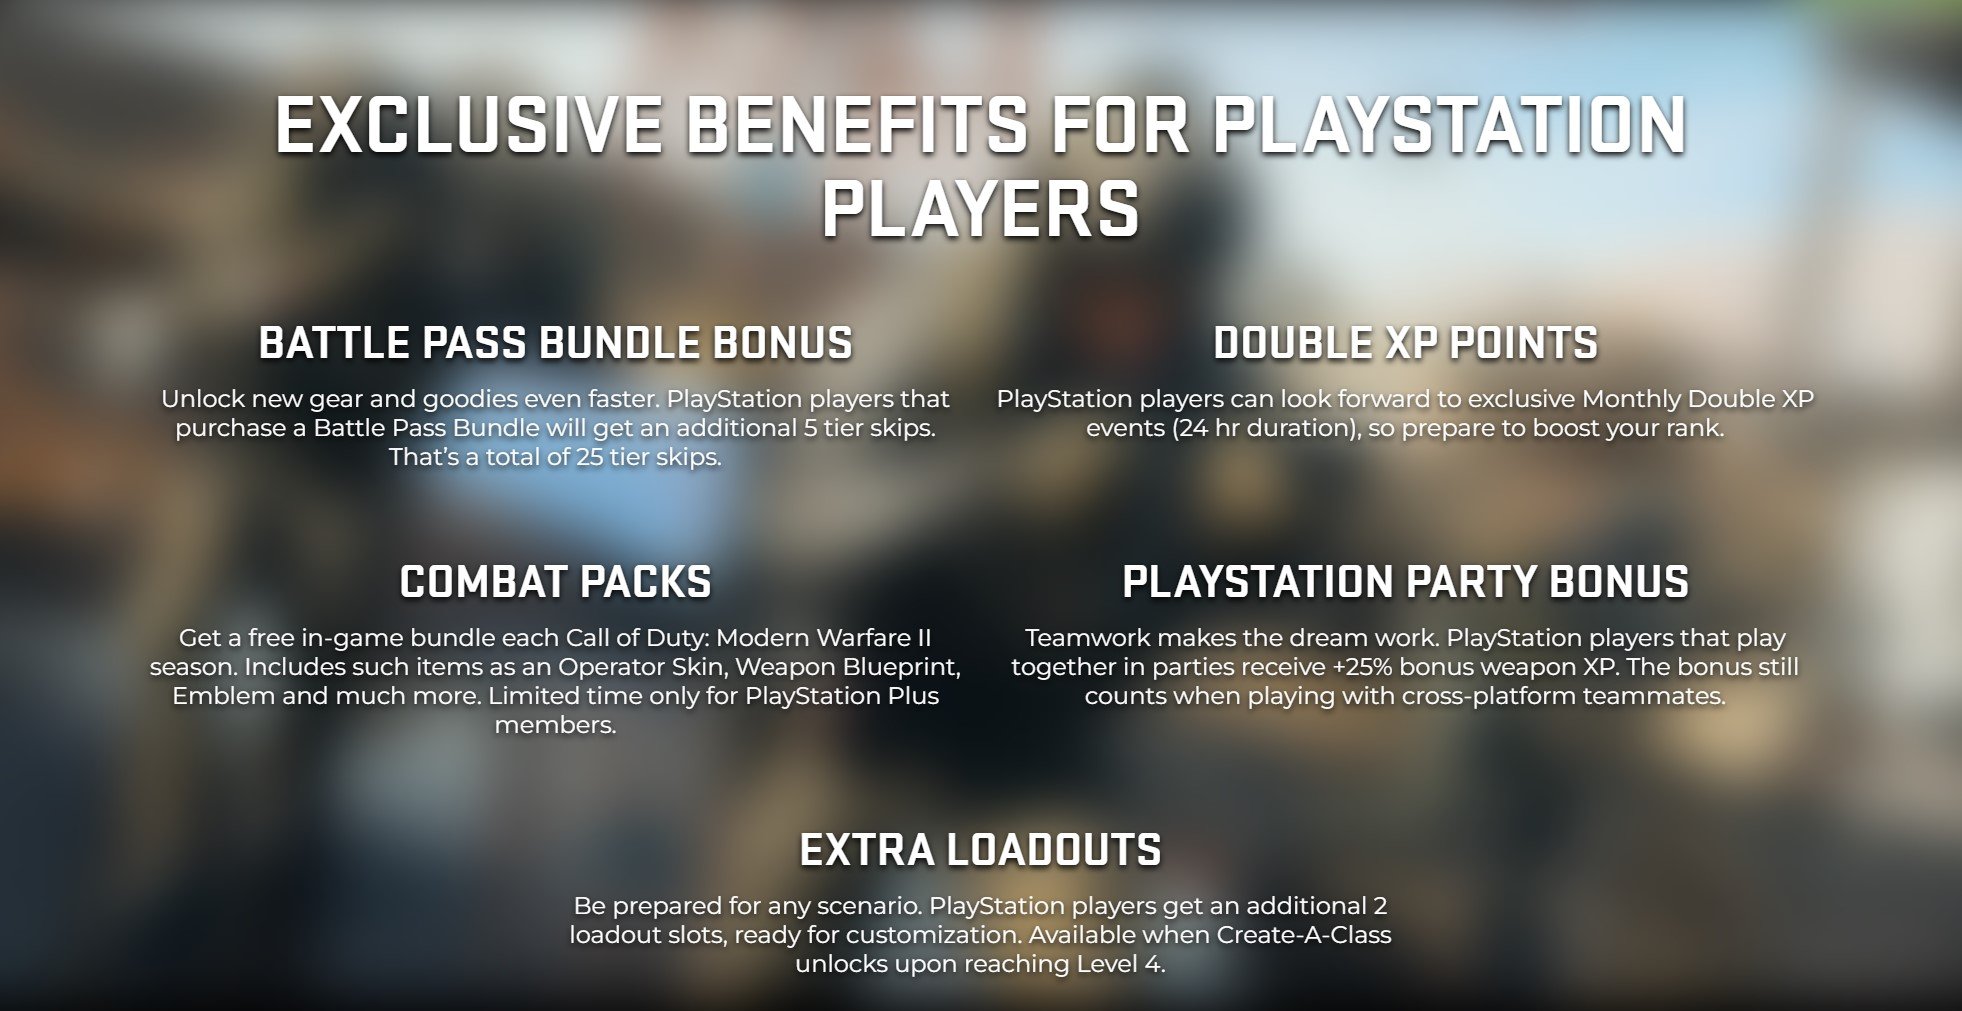 Modern Warfare III: Pre-purchase Options and Benefits — Call of Duty: Modern  Warfare II — Blizzard News